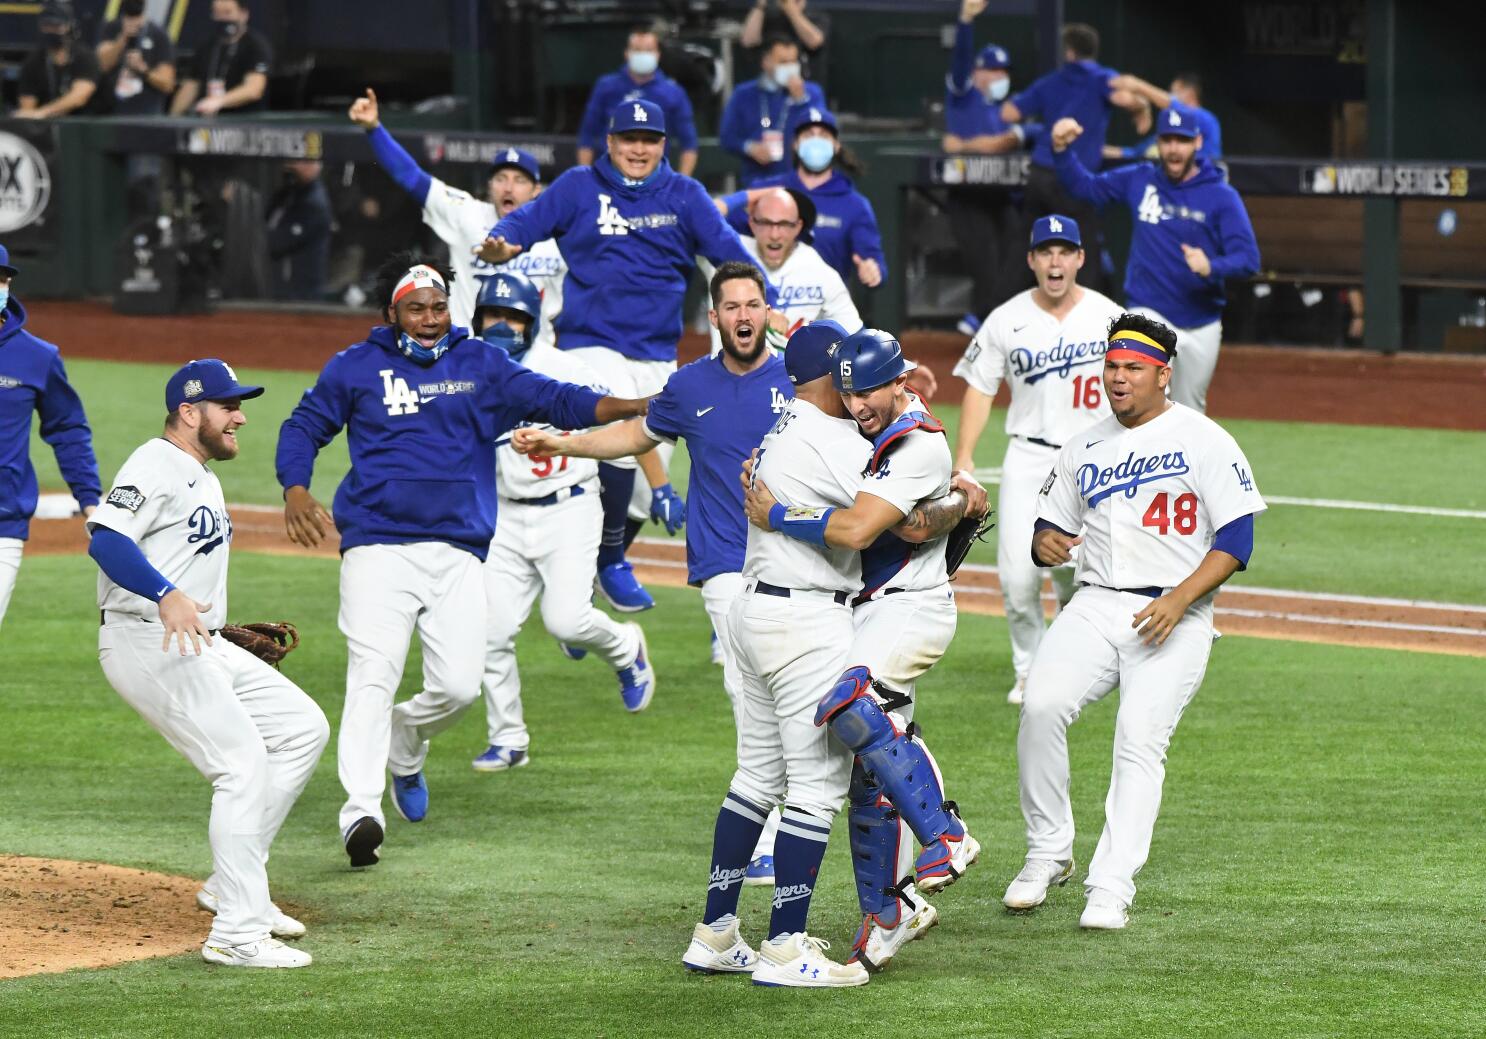 LA Los Angeles Dodgers Julio Urias World Series Champions